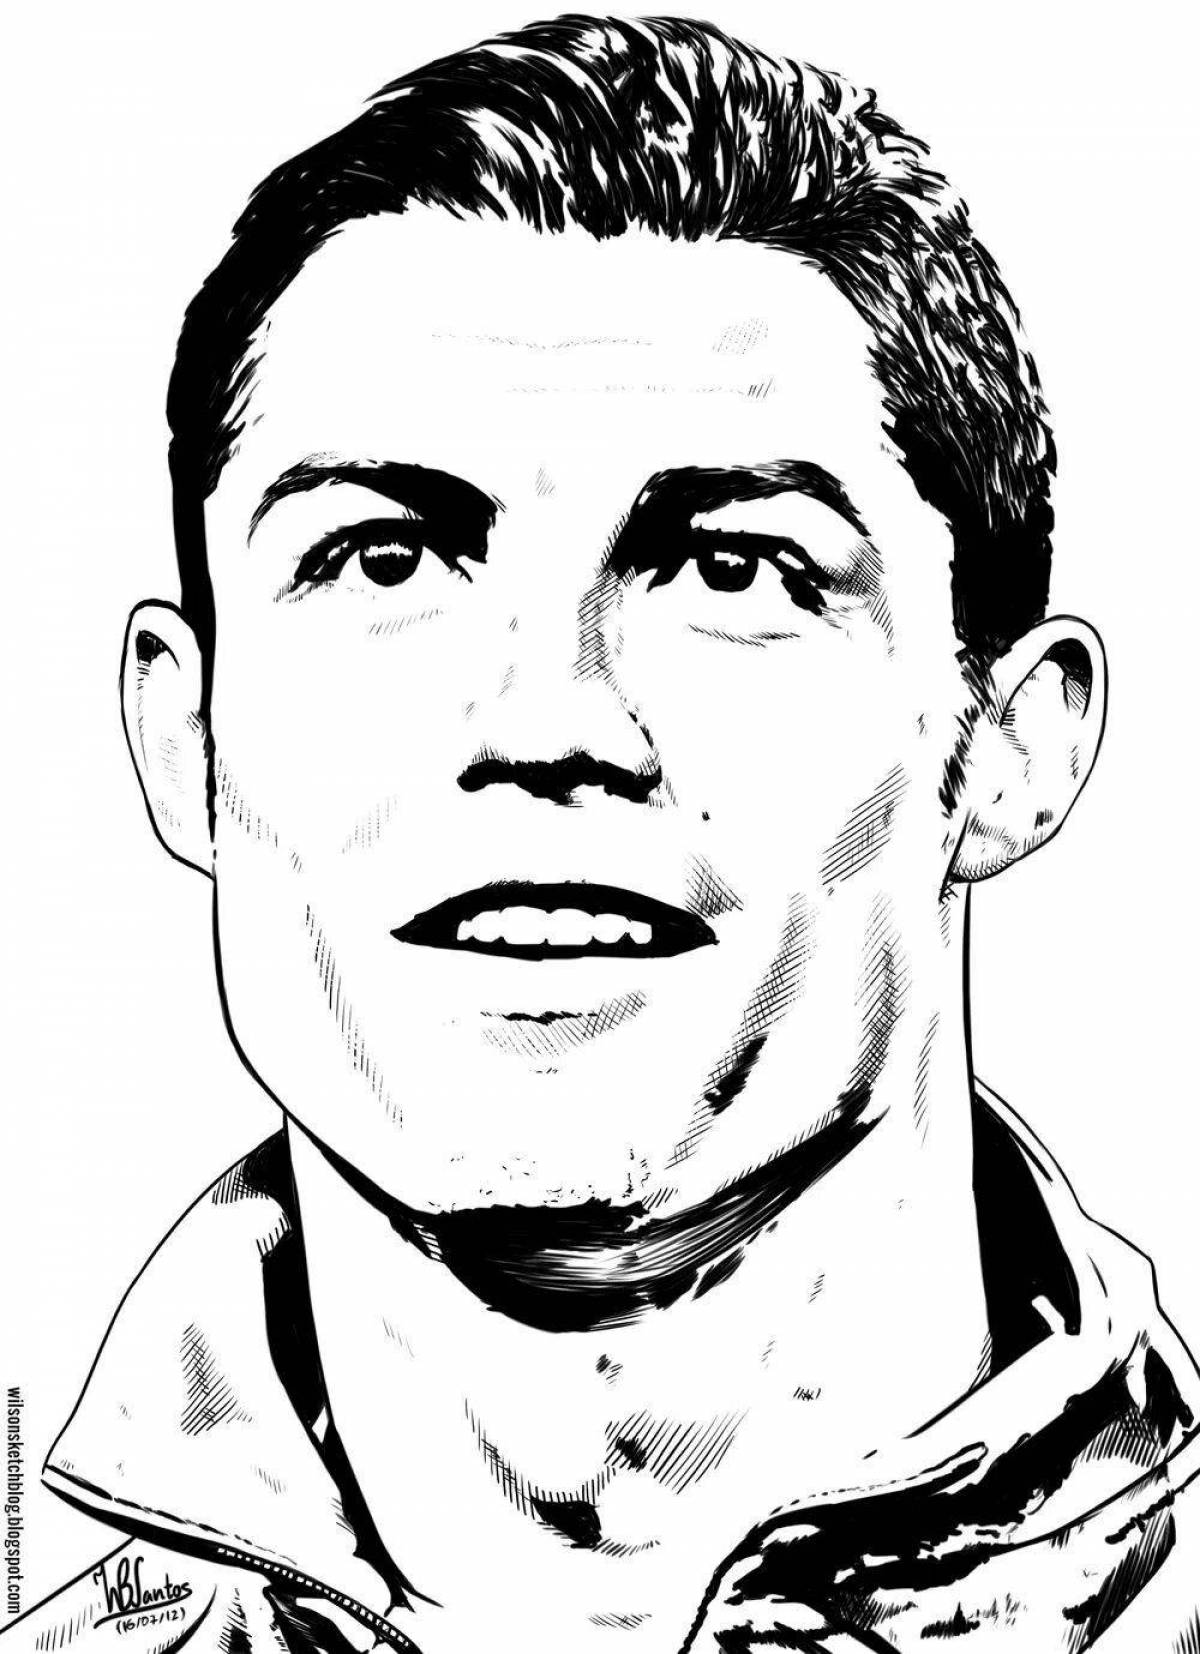 Ronaldo comic coloring book